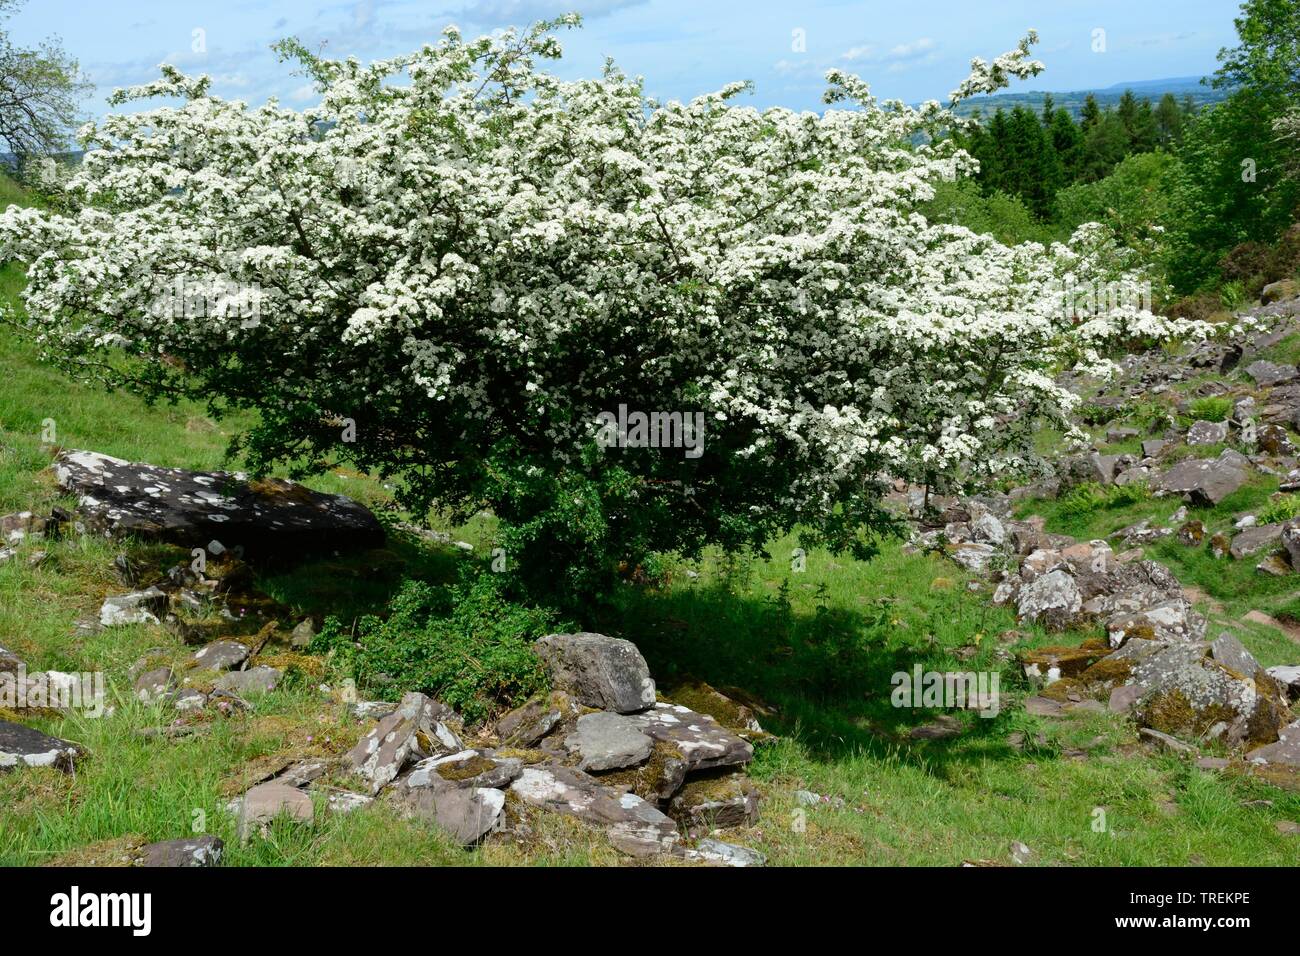 Hawthorn tree shrub in flower Crataegus monogyna deciduous native tree in the UK Brecon Beacons National Park Wales Cymru UK Stock Photo